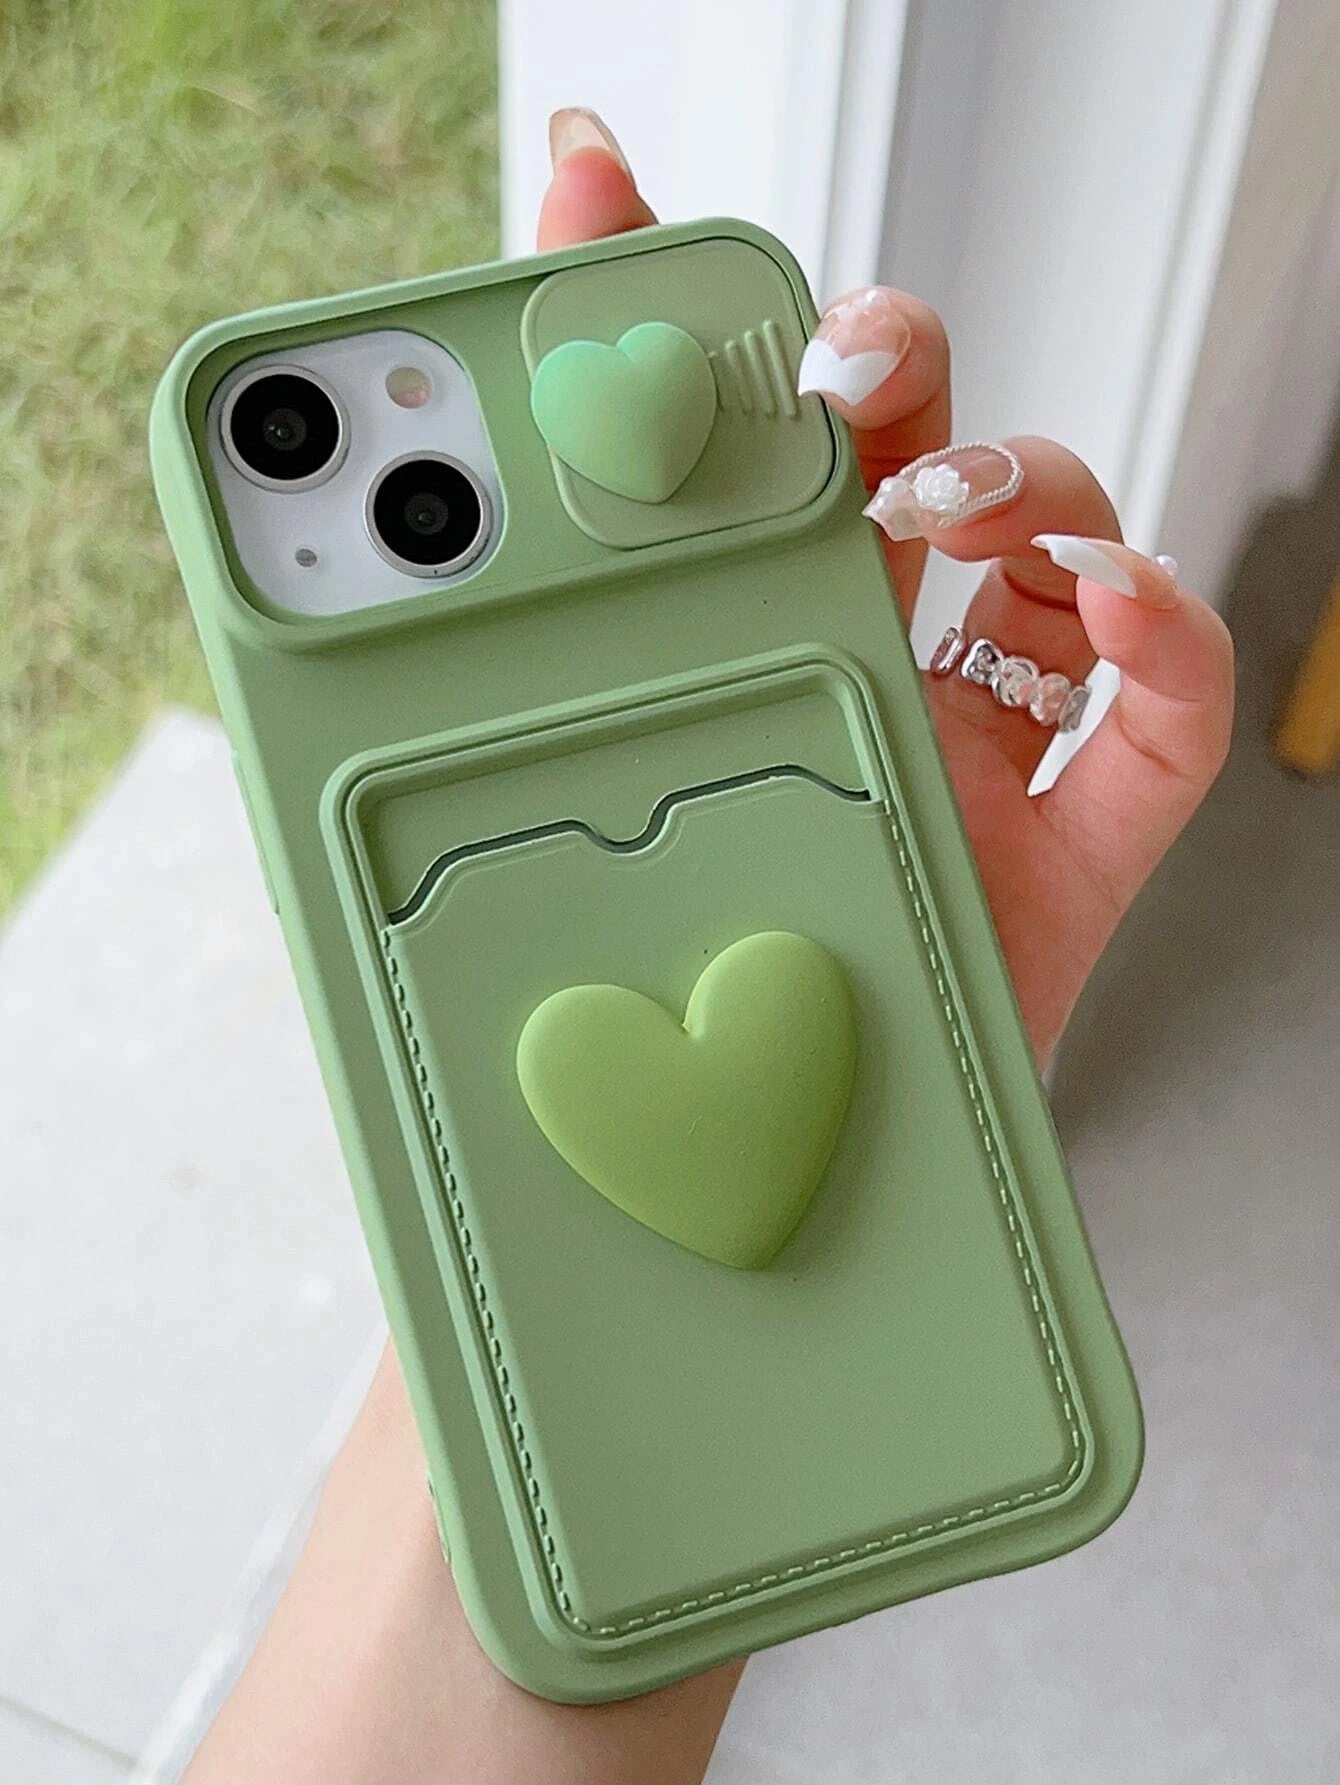 Sliding Transparent Double Heart Sticker Picture Frame Card Holder Phone Case